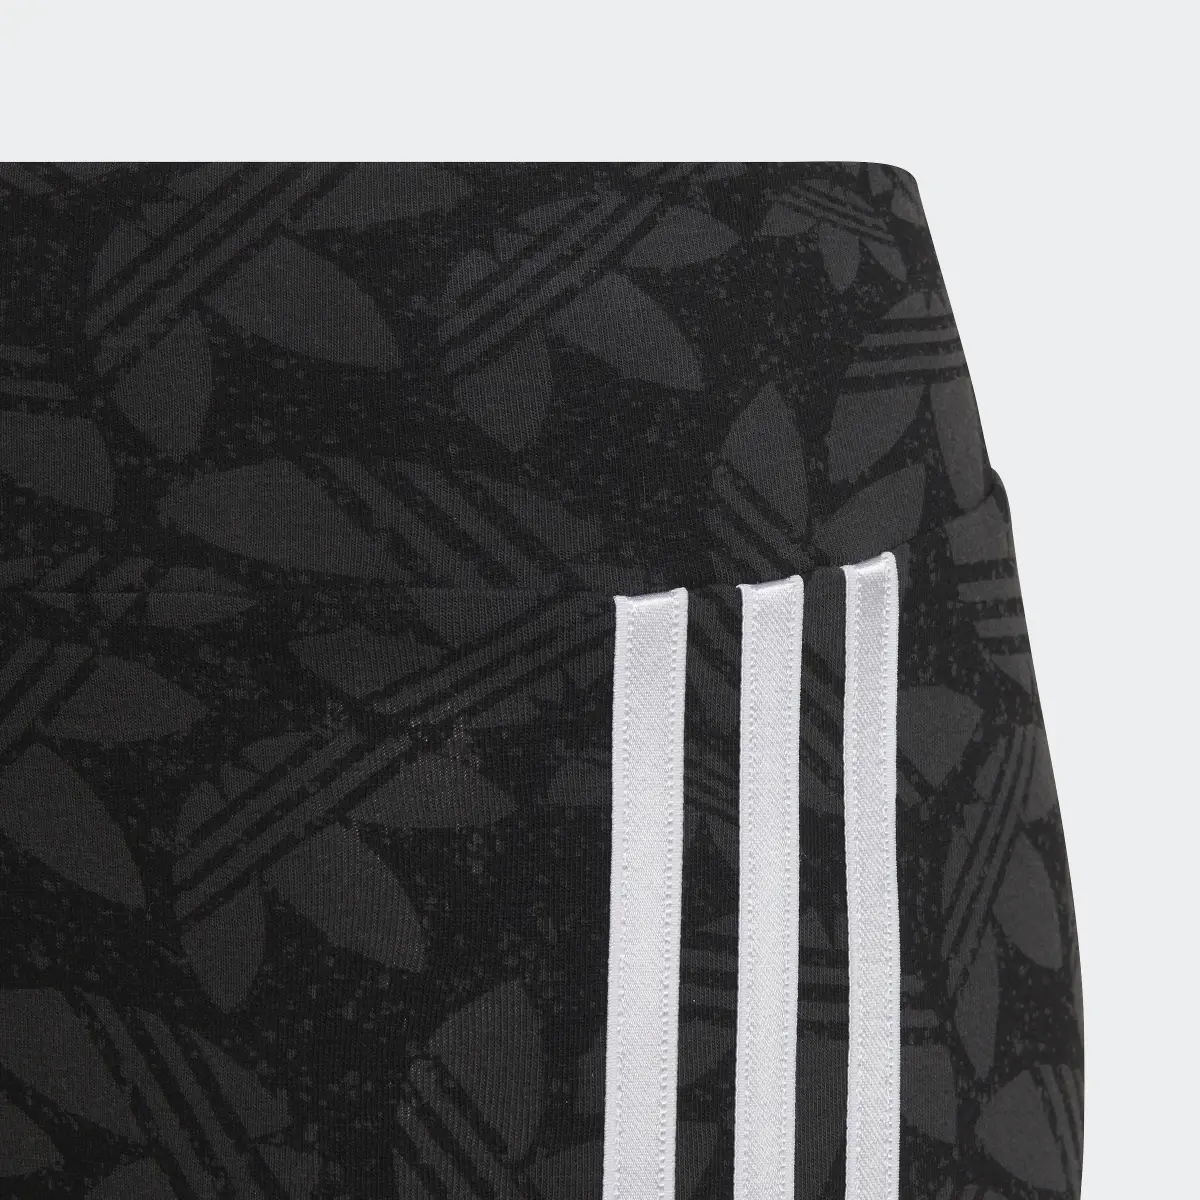 Adidas High-Waisted Allover Print Leggings. 3